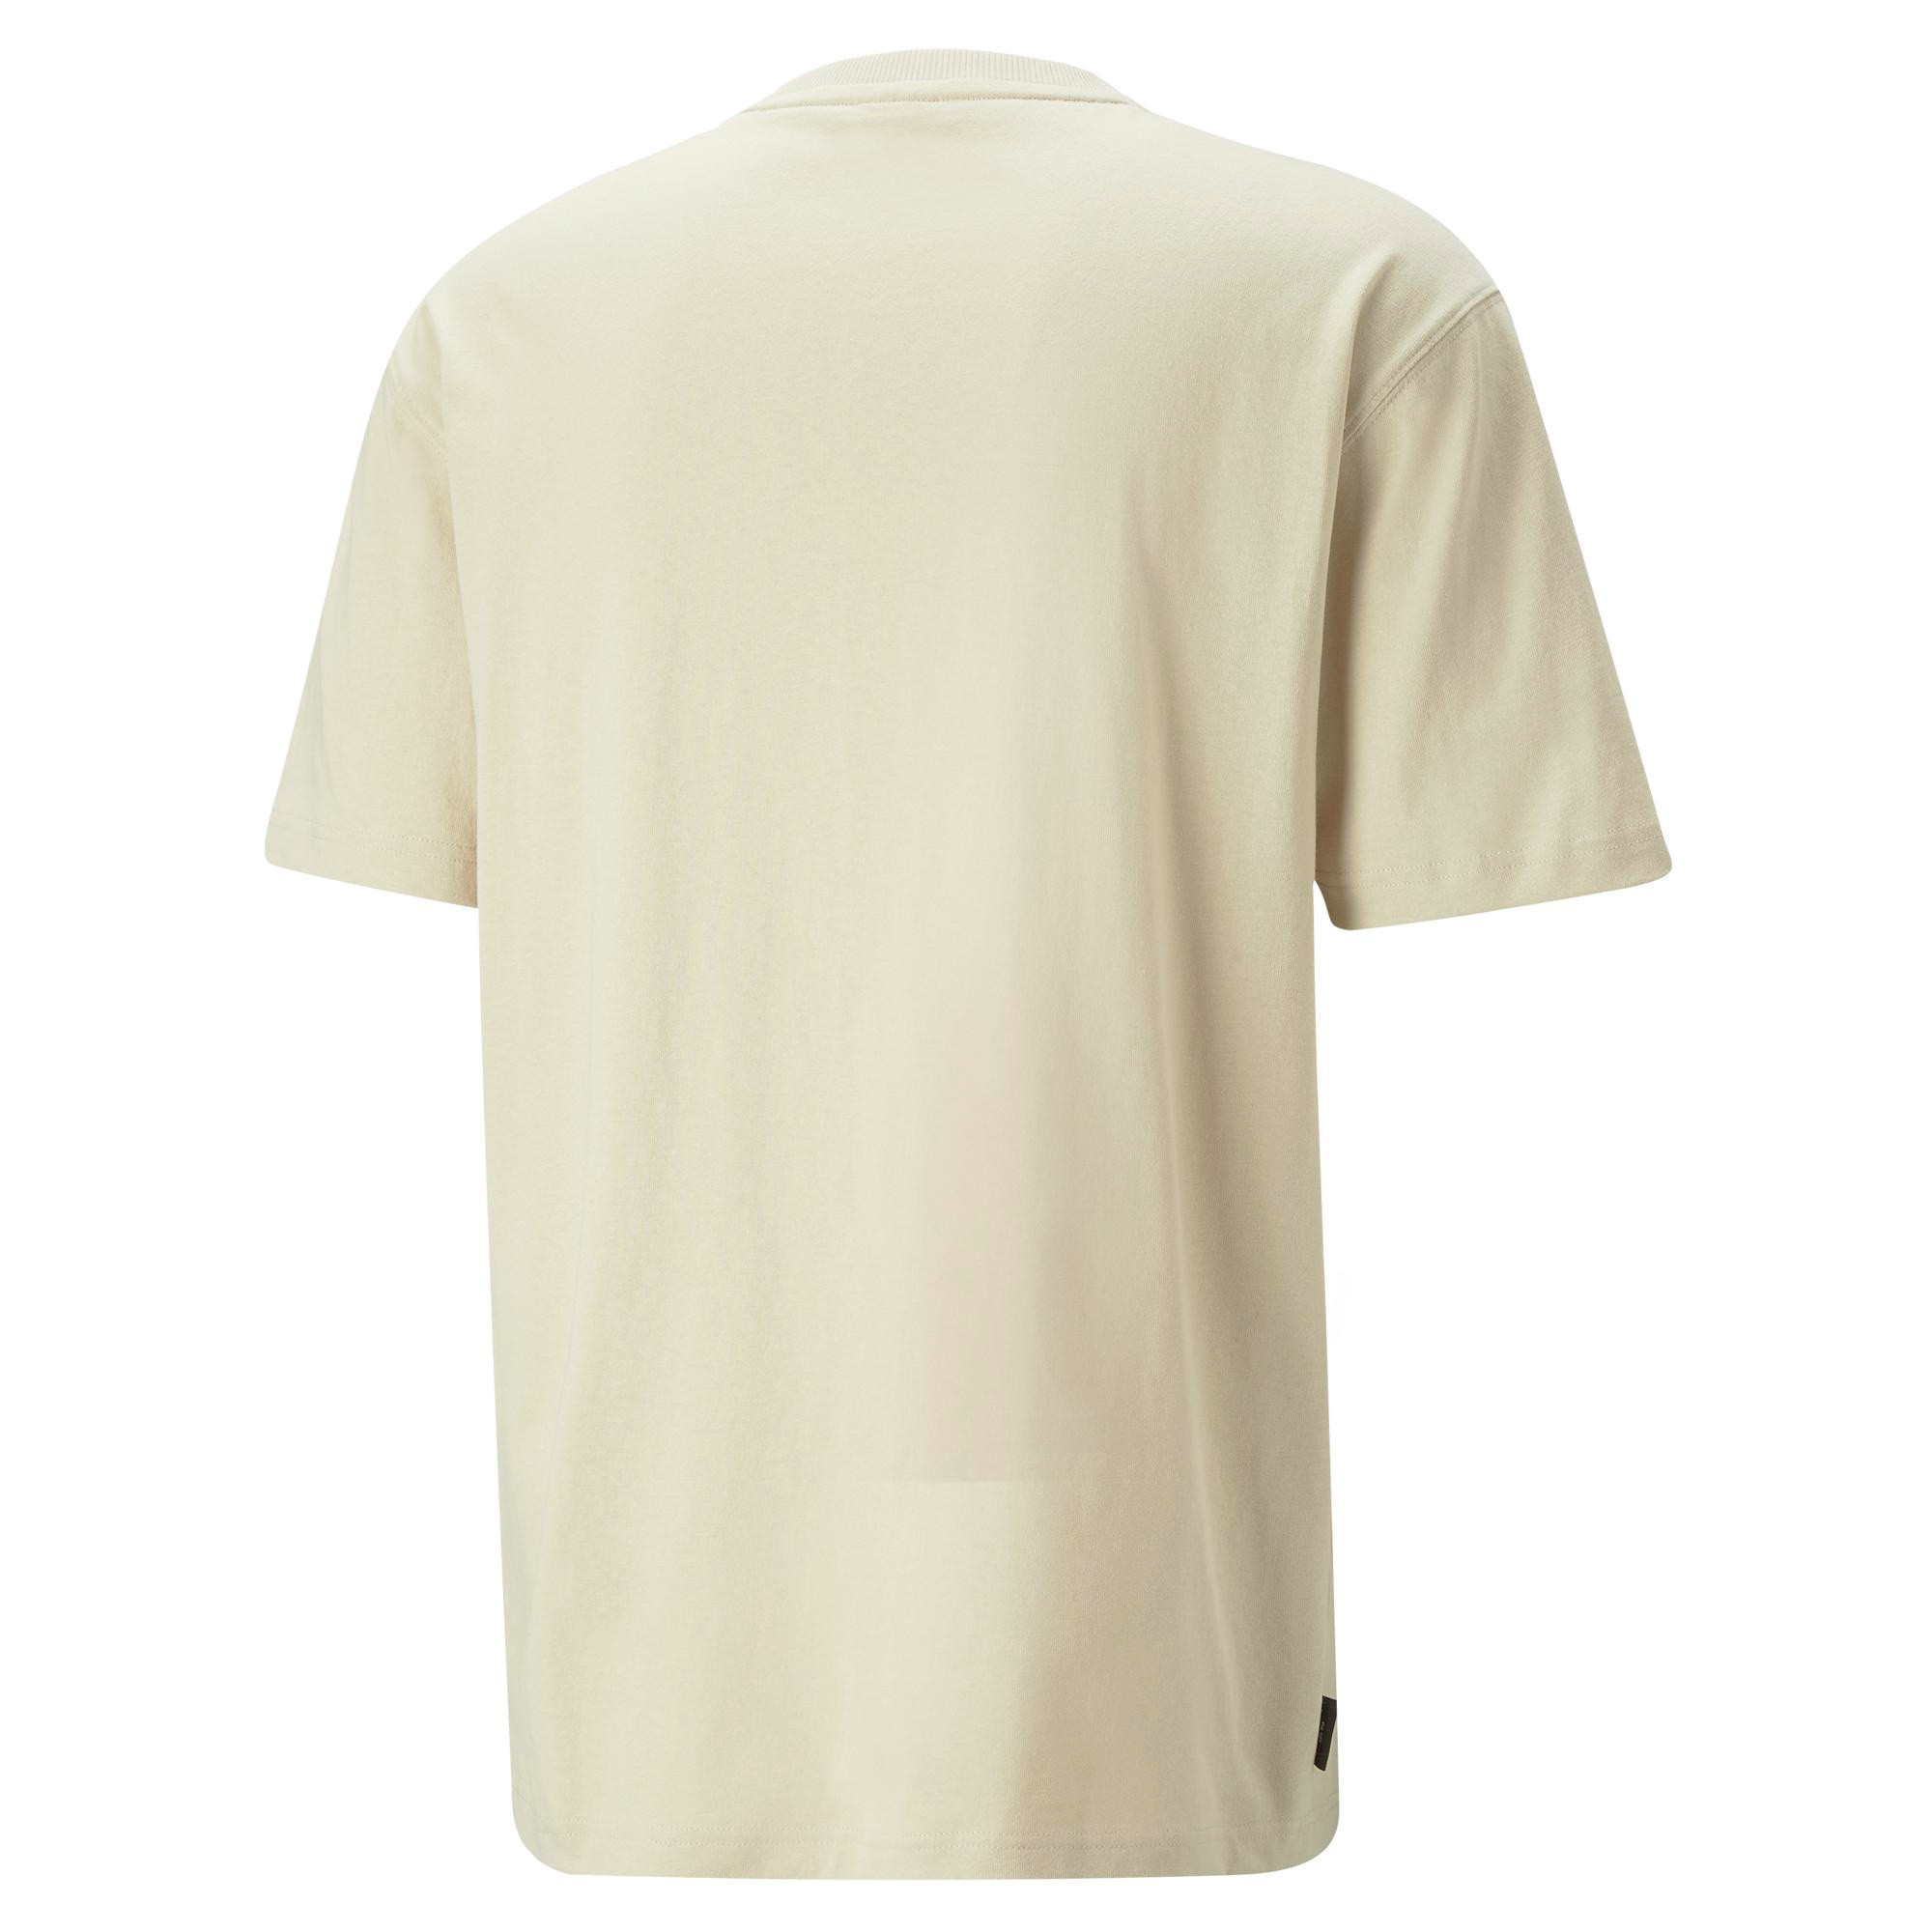 Puma - T-shirt in cotone con logo, Beige chiaro, large image number 1